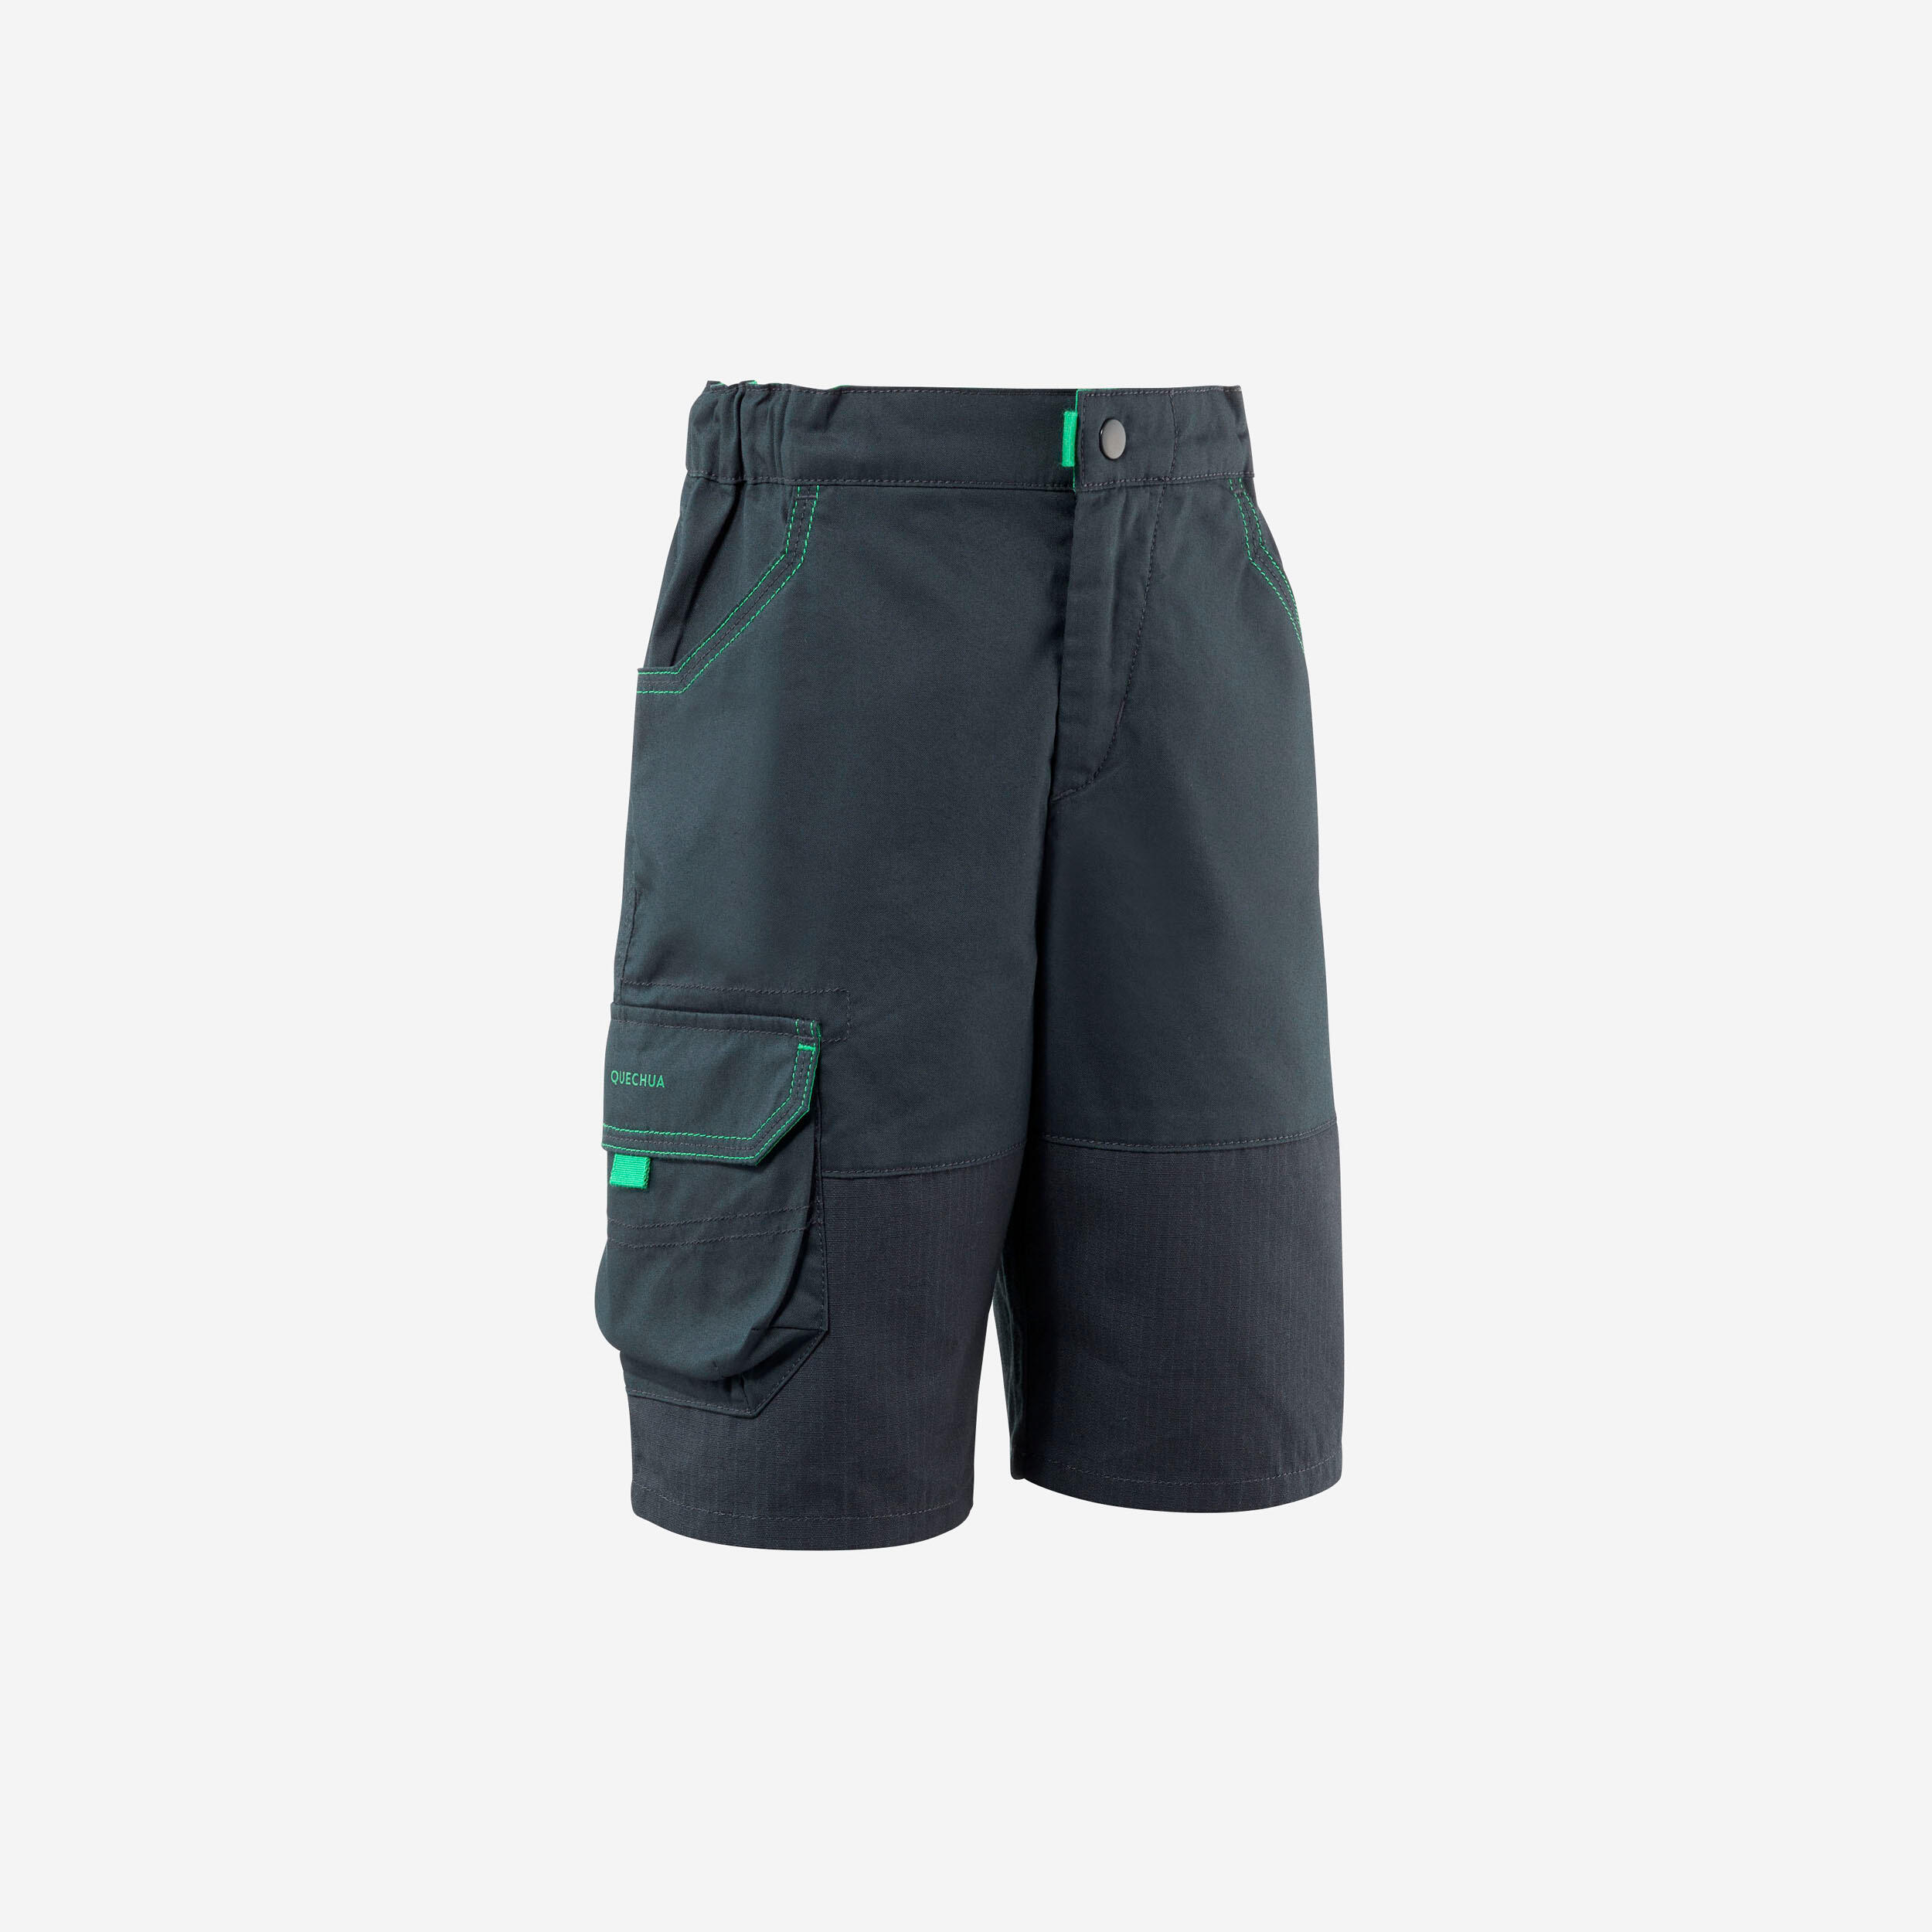 Kids’ hiking shorts - MH500 KID dark grey - 2-6 years old 1/2